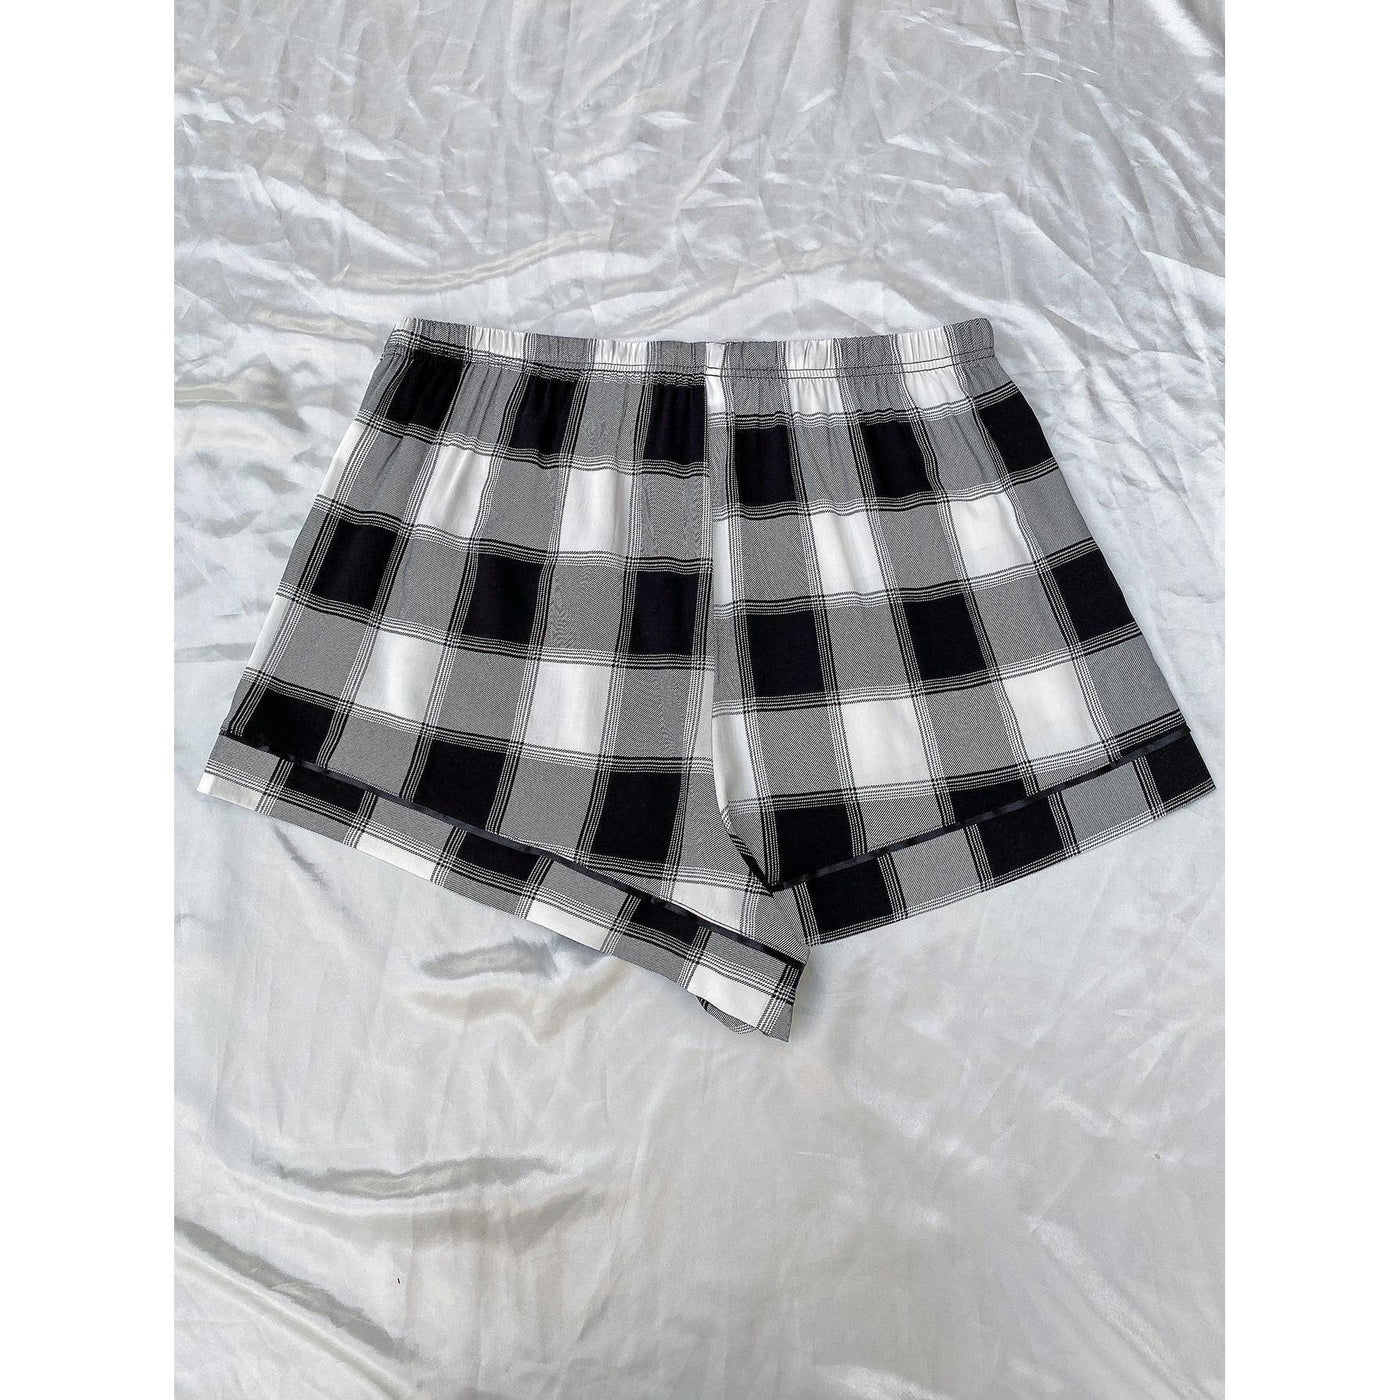 Plus Size Pajamas Women Plaid Drawstring Shorts Spring Summer Home Pants